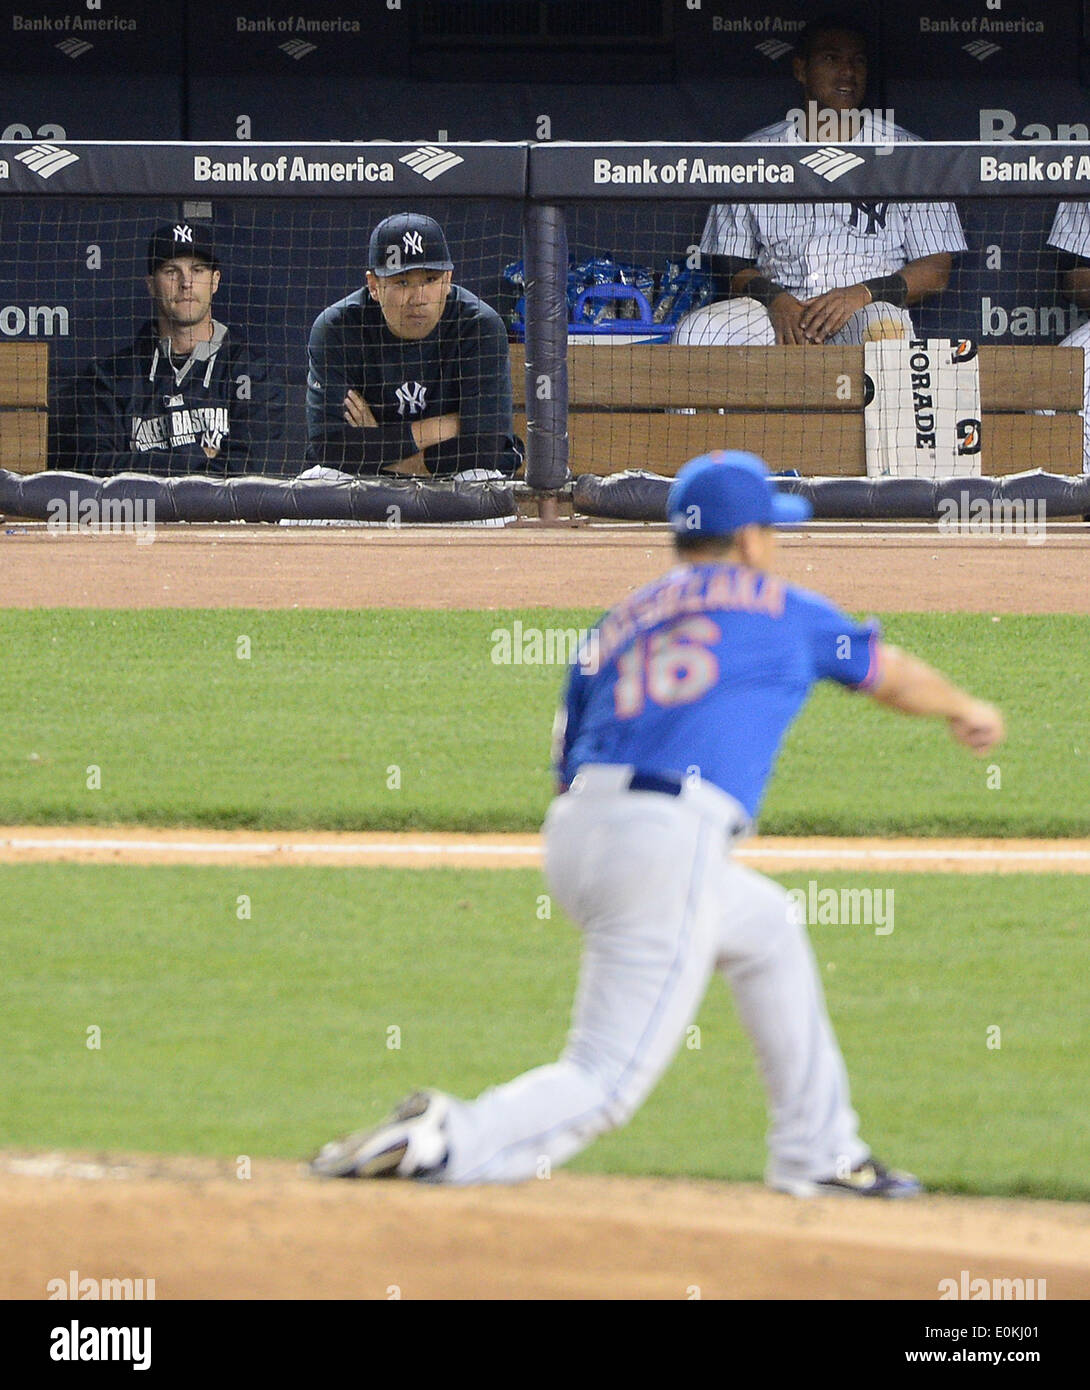 Masahiro Tanaka (Yankee), Daisuke Matsuzaka (Mets), le 13 mai 2014 - MLB : Masahiro Tanaka des New York Yankees montres de l'étang que Daisuke Matsuzaka les Mets de New York emplacements pendant la partie de baseball de ligue majeure au Yankee Stadium dans le Bronx, New York, United States. (Photo de bla) Banque D'Images